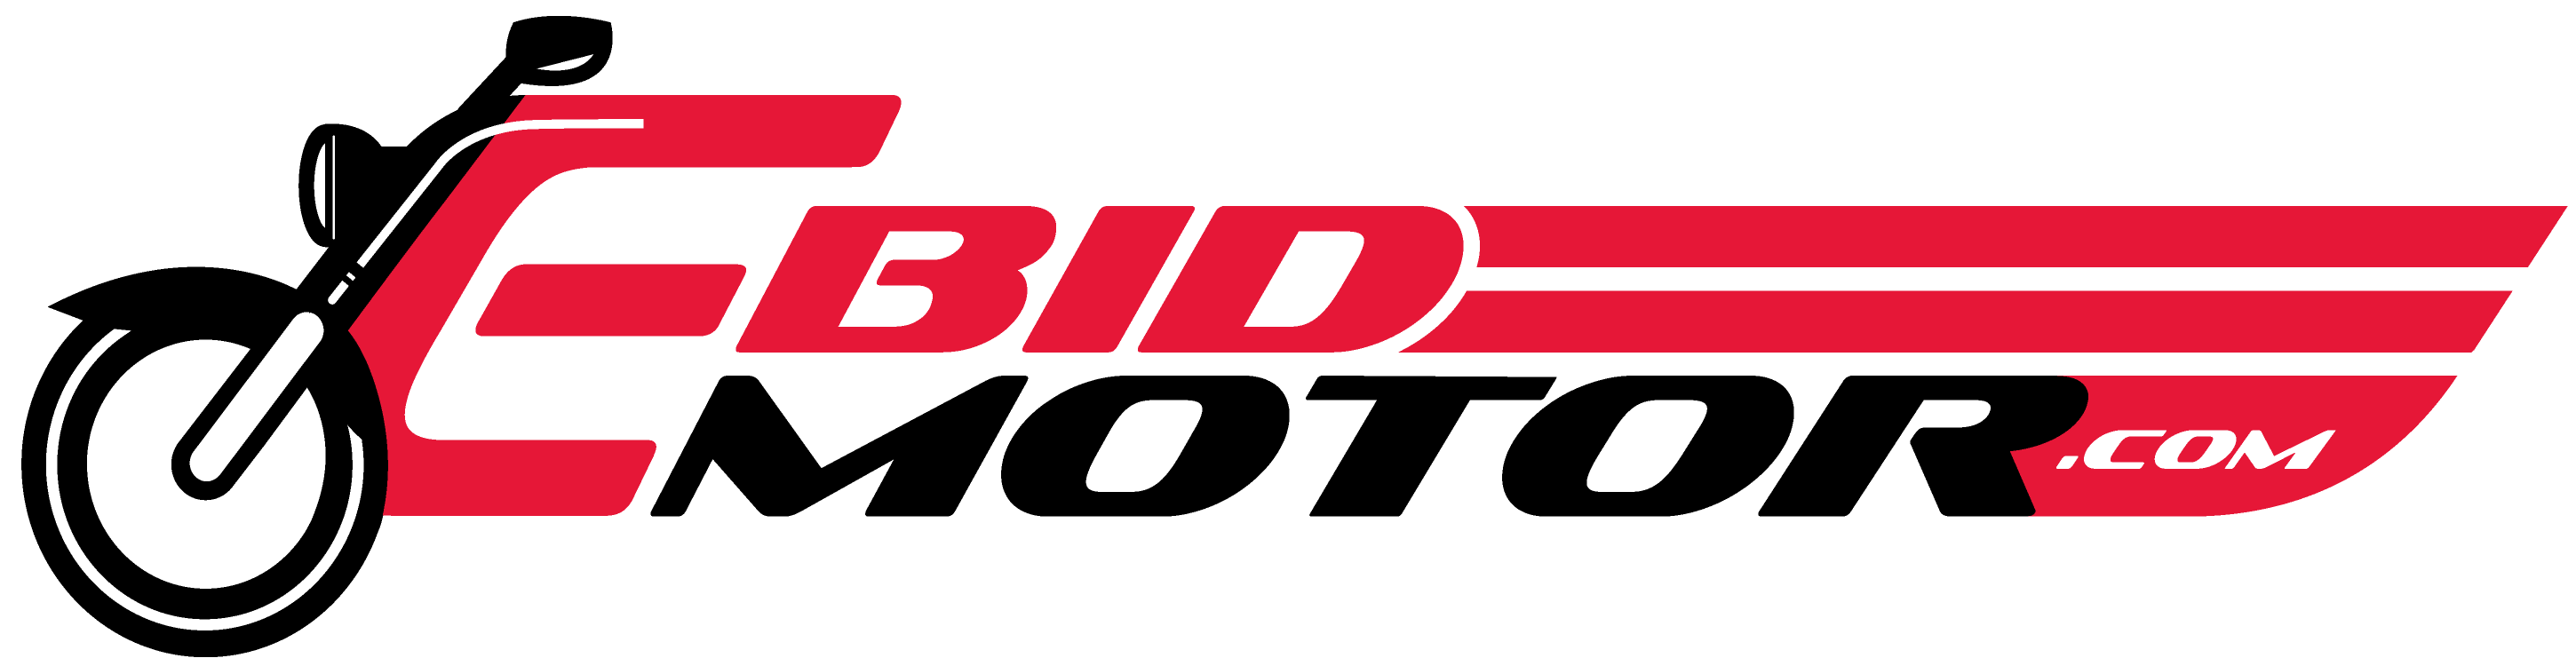 Ebid Motor Logo